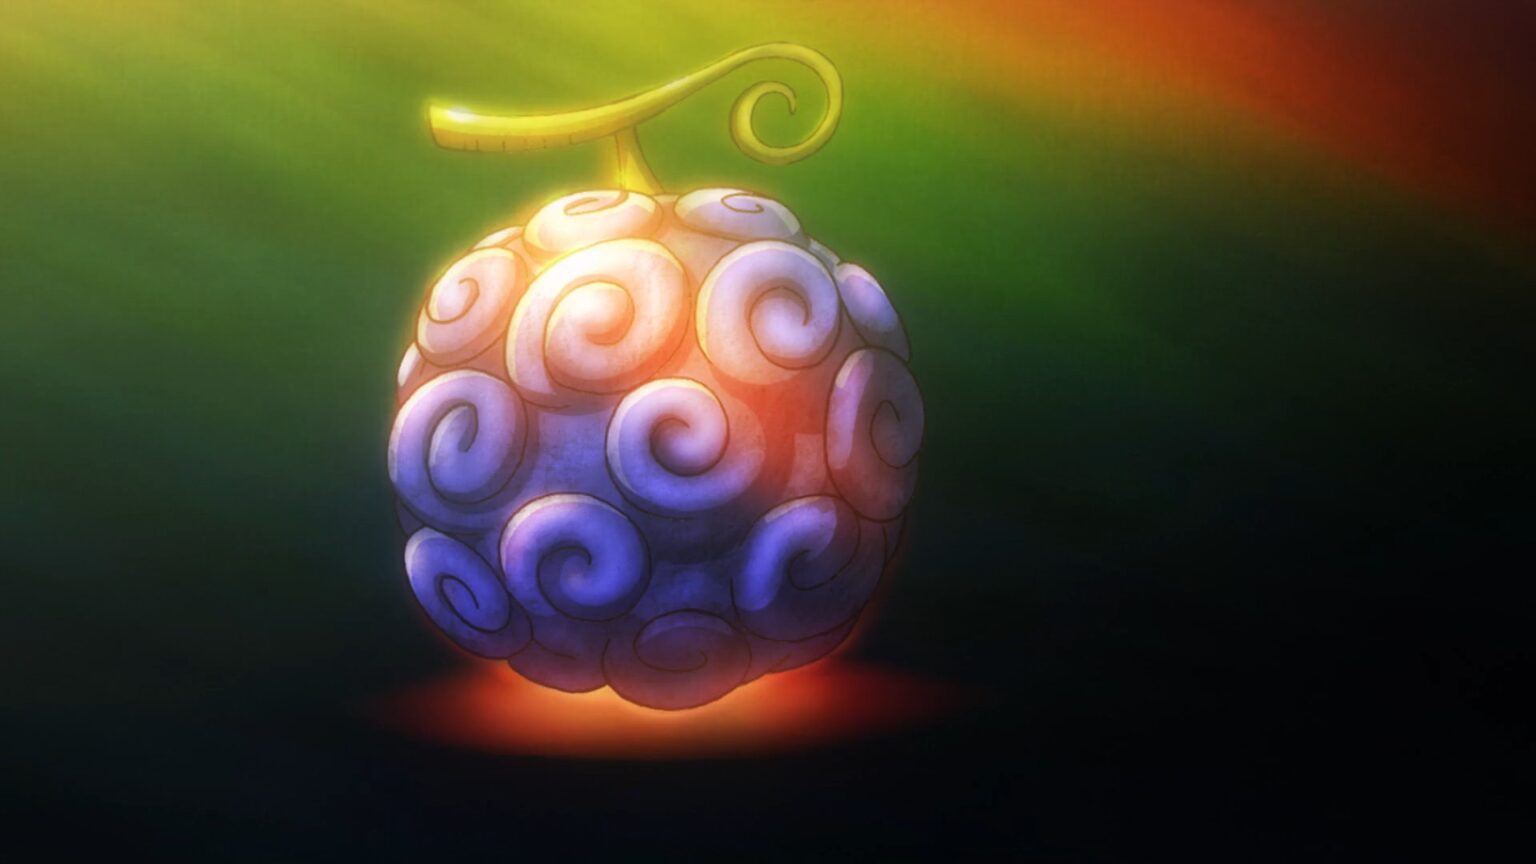 One Piece 1071 Gomu Gomu no Mi turned out to be an zoan Devil Fruit.